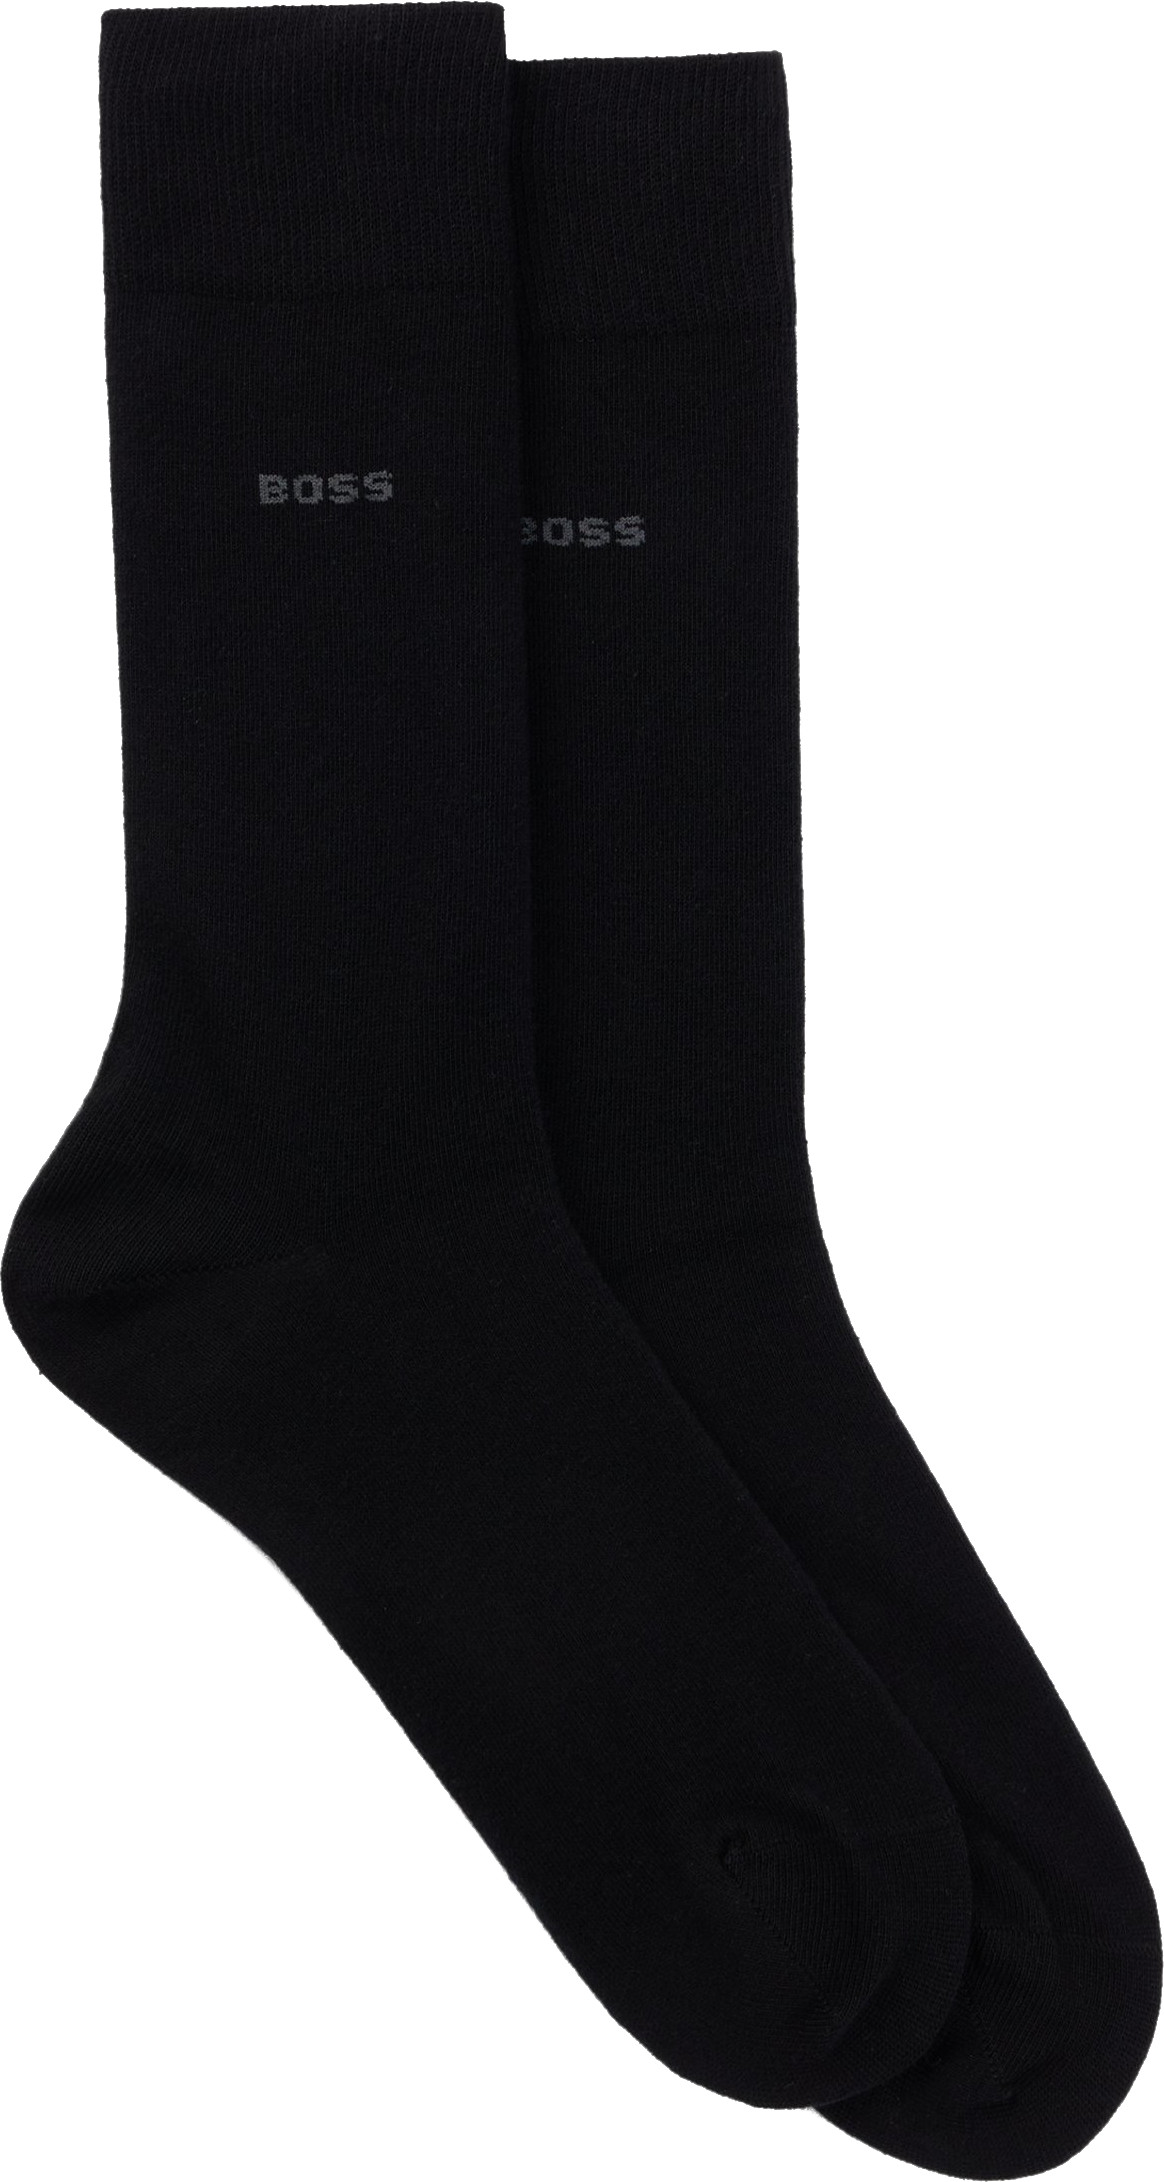 Hugo Boss 2 PACK - férfi zokni BOSS 50516616-001 39-42